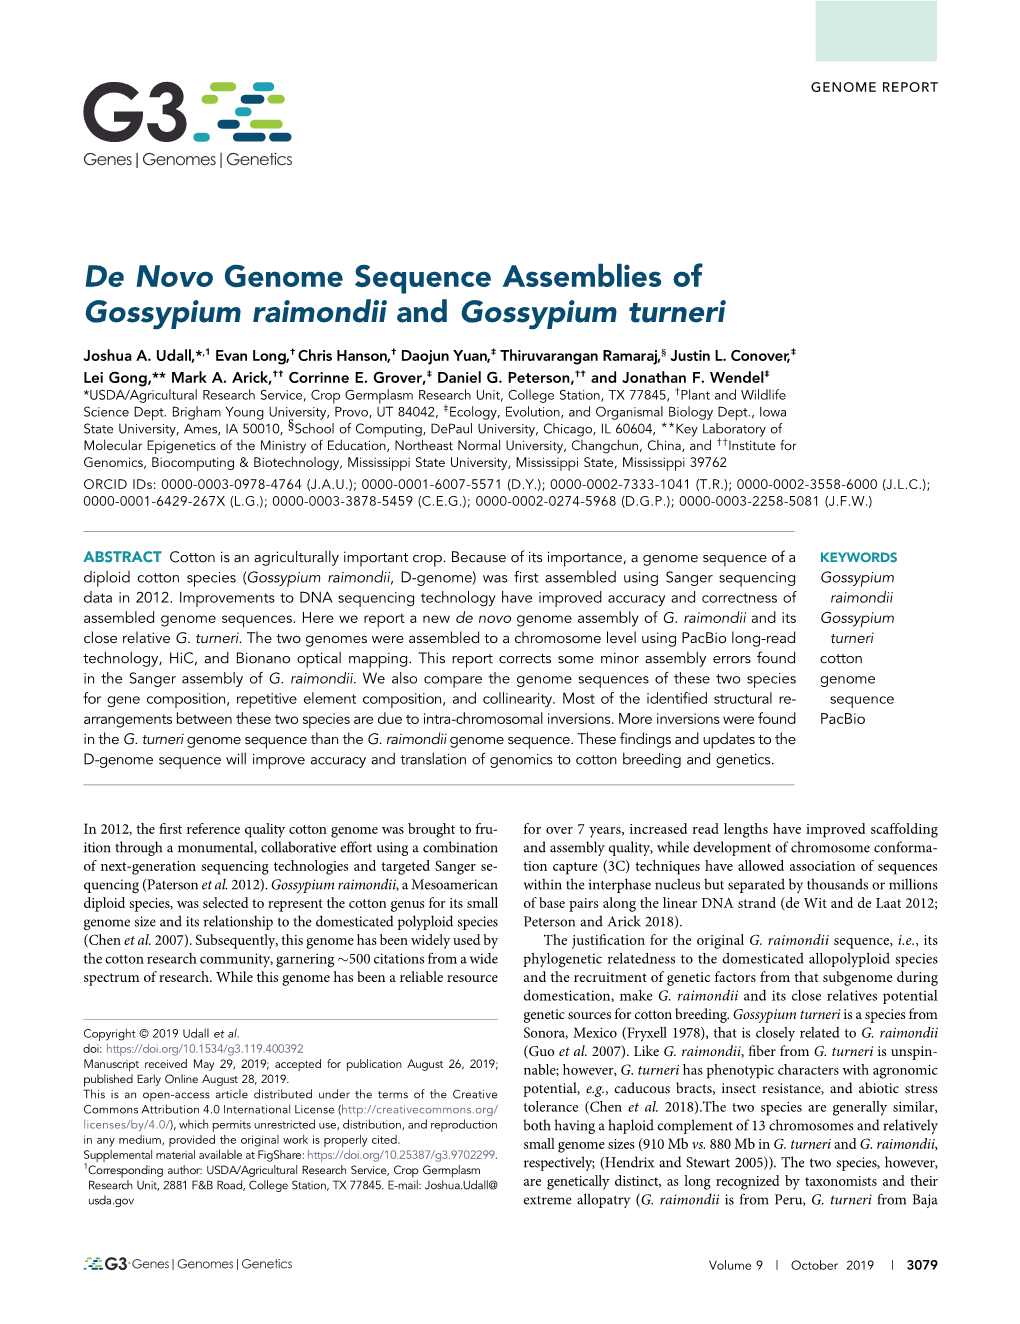 De Novo Genome Sequence Assemblies of Gossypium Raimondii and Gossypium Turneri